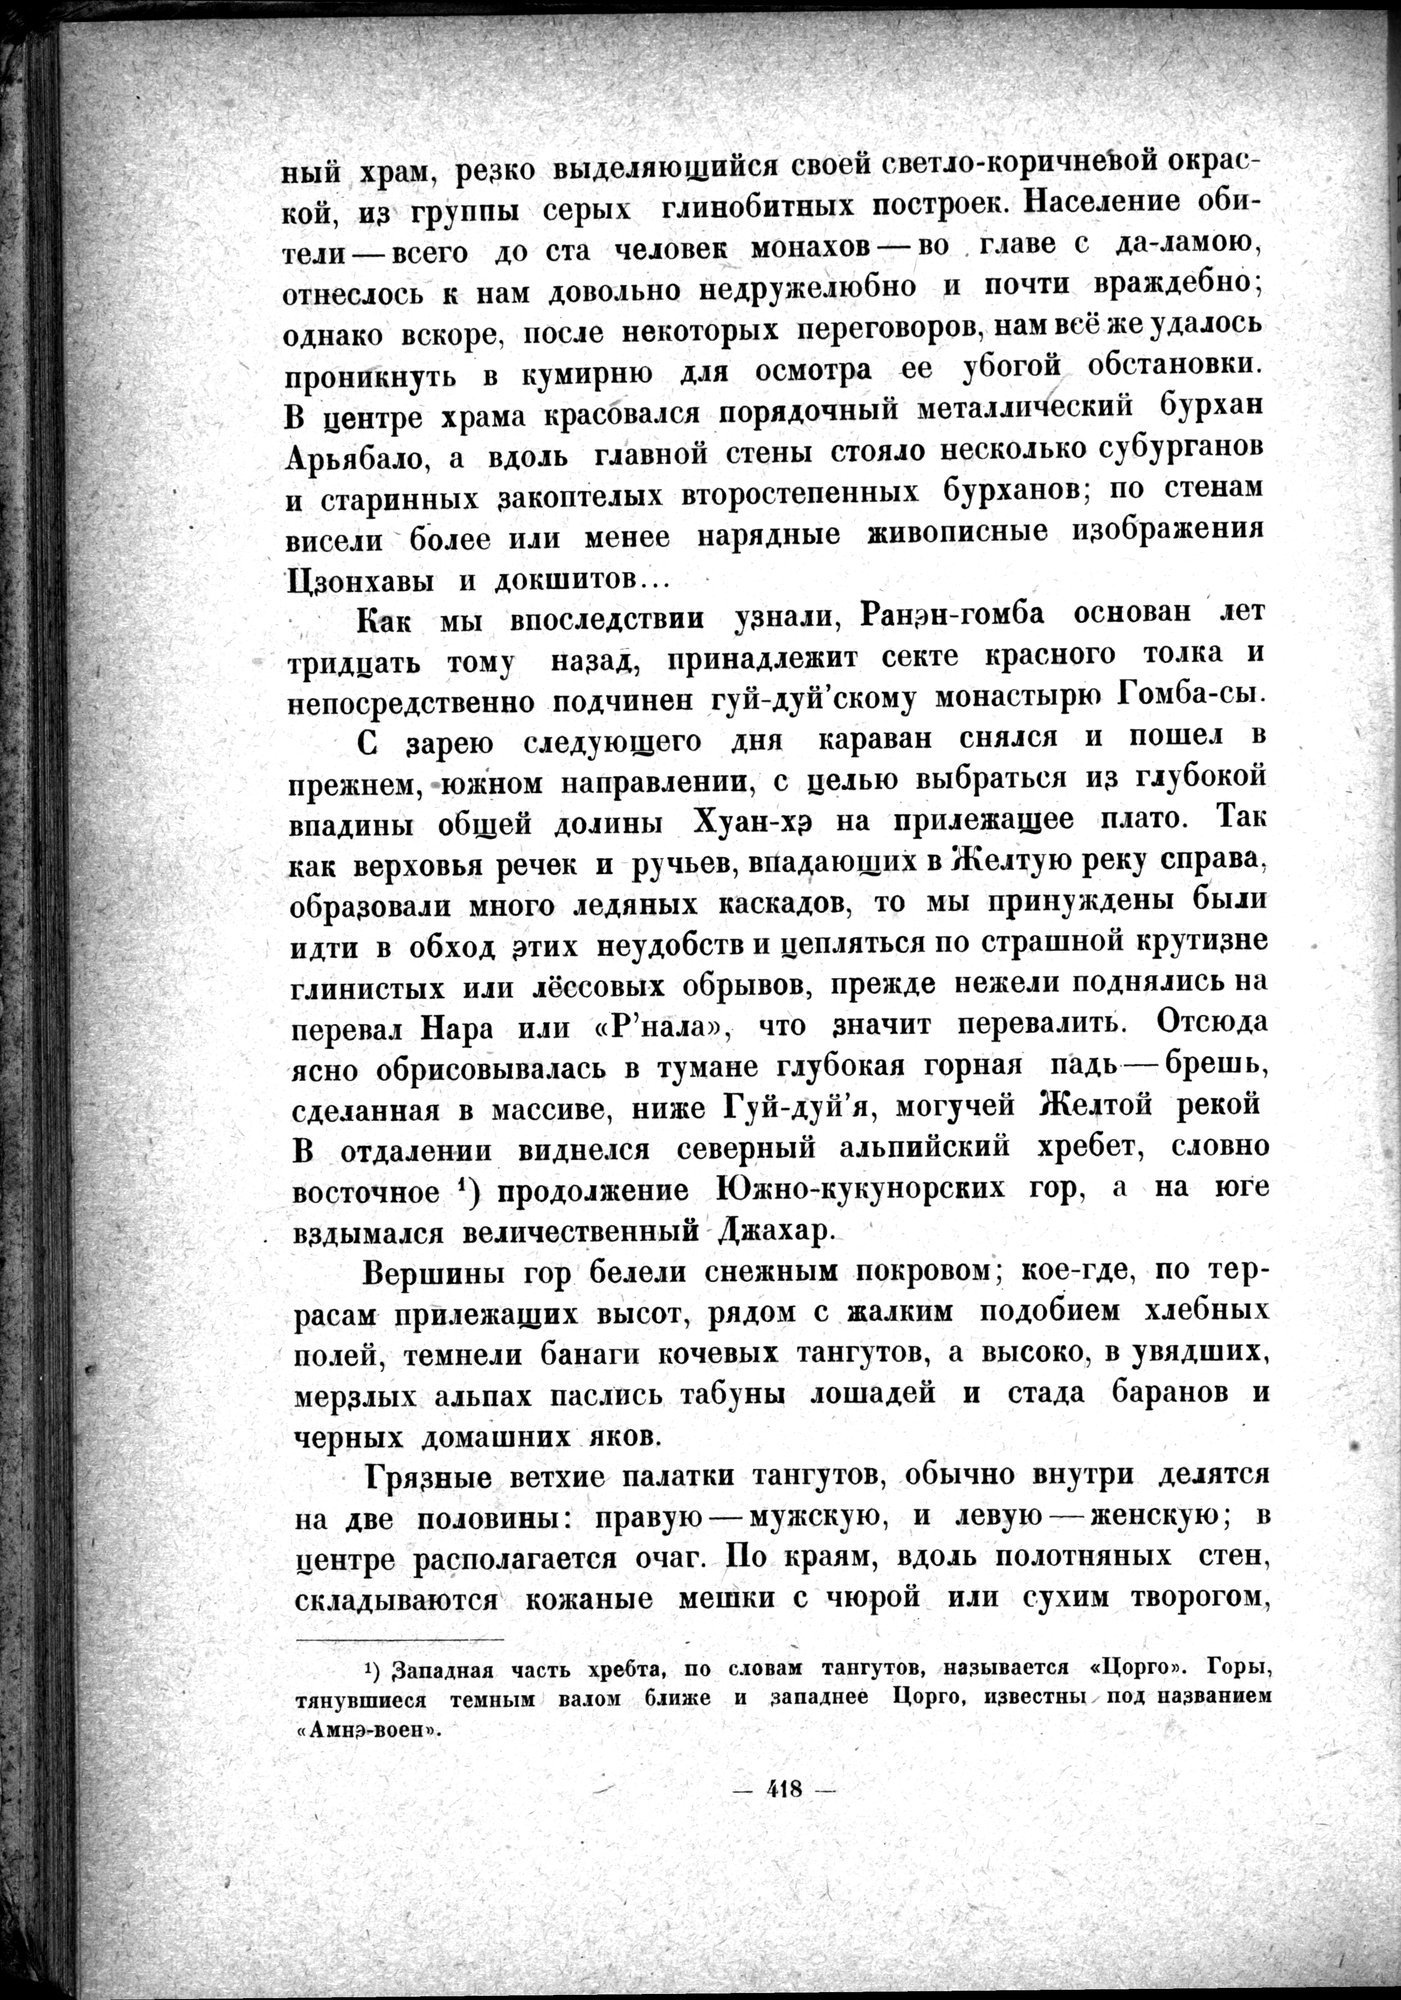 Mongoliya i Amdo i mertby gorod Khara-Khoto : vol.1 / Page 480 (Grayscale High Resolution Image)